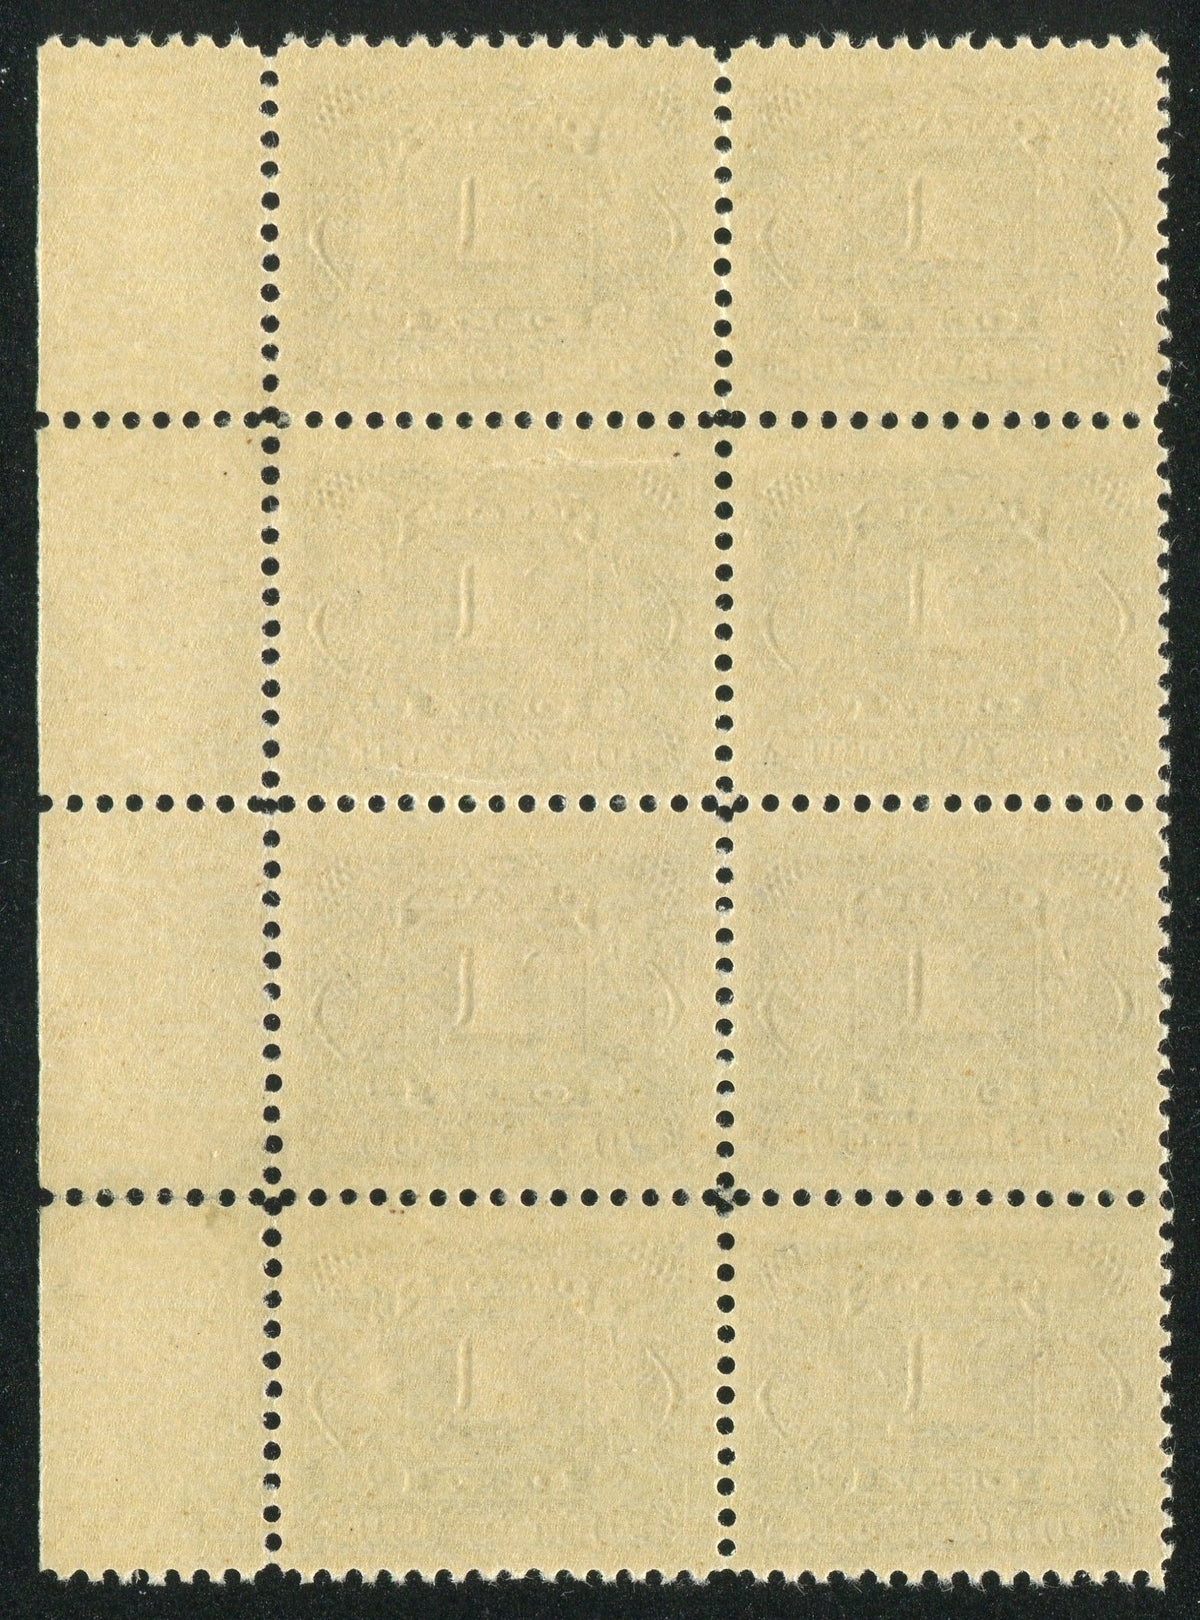 0117CA1710 - Canada J1 - Mint Plate Block of 8